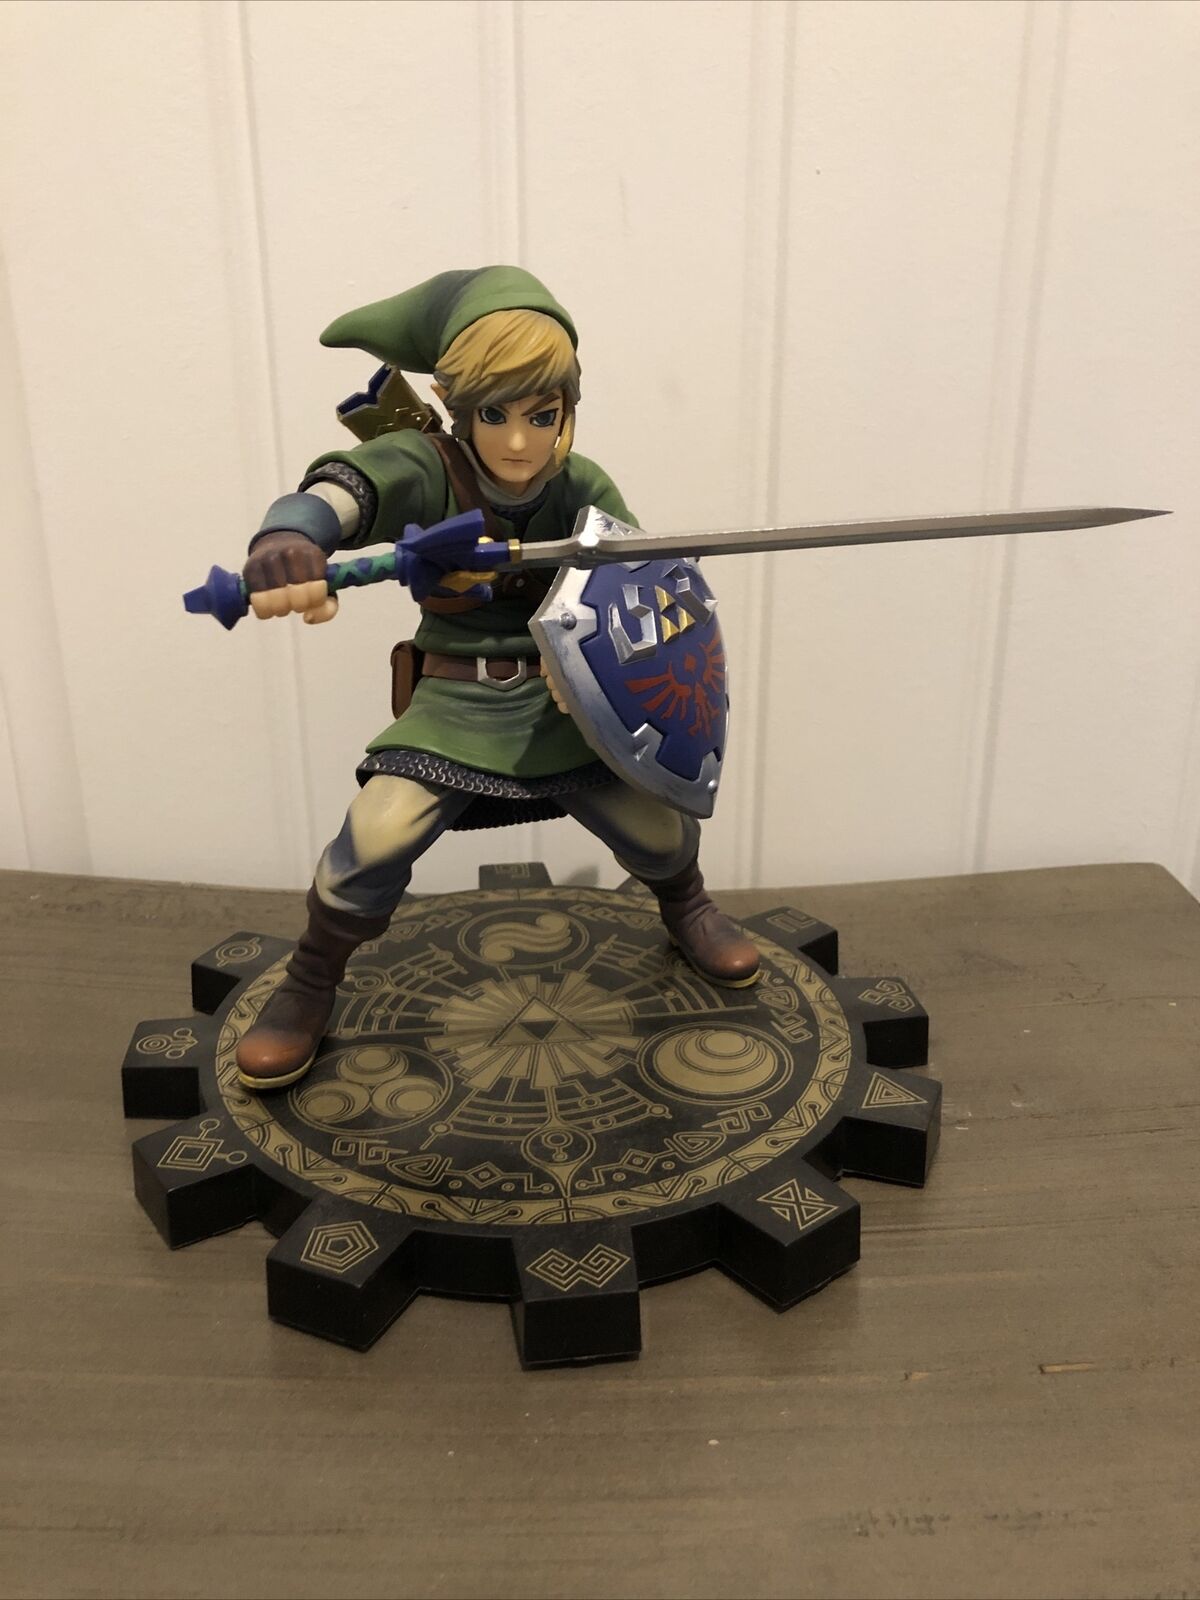 Large Rare Legendary Link Model Figure The Legend of Zelda 8 Inch Tall